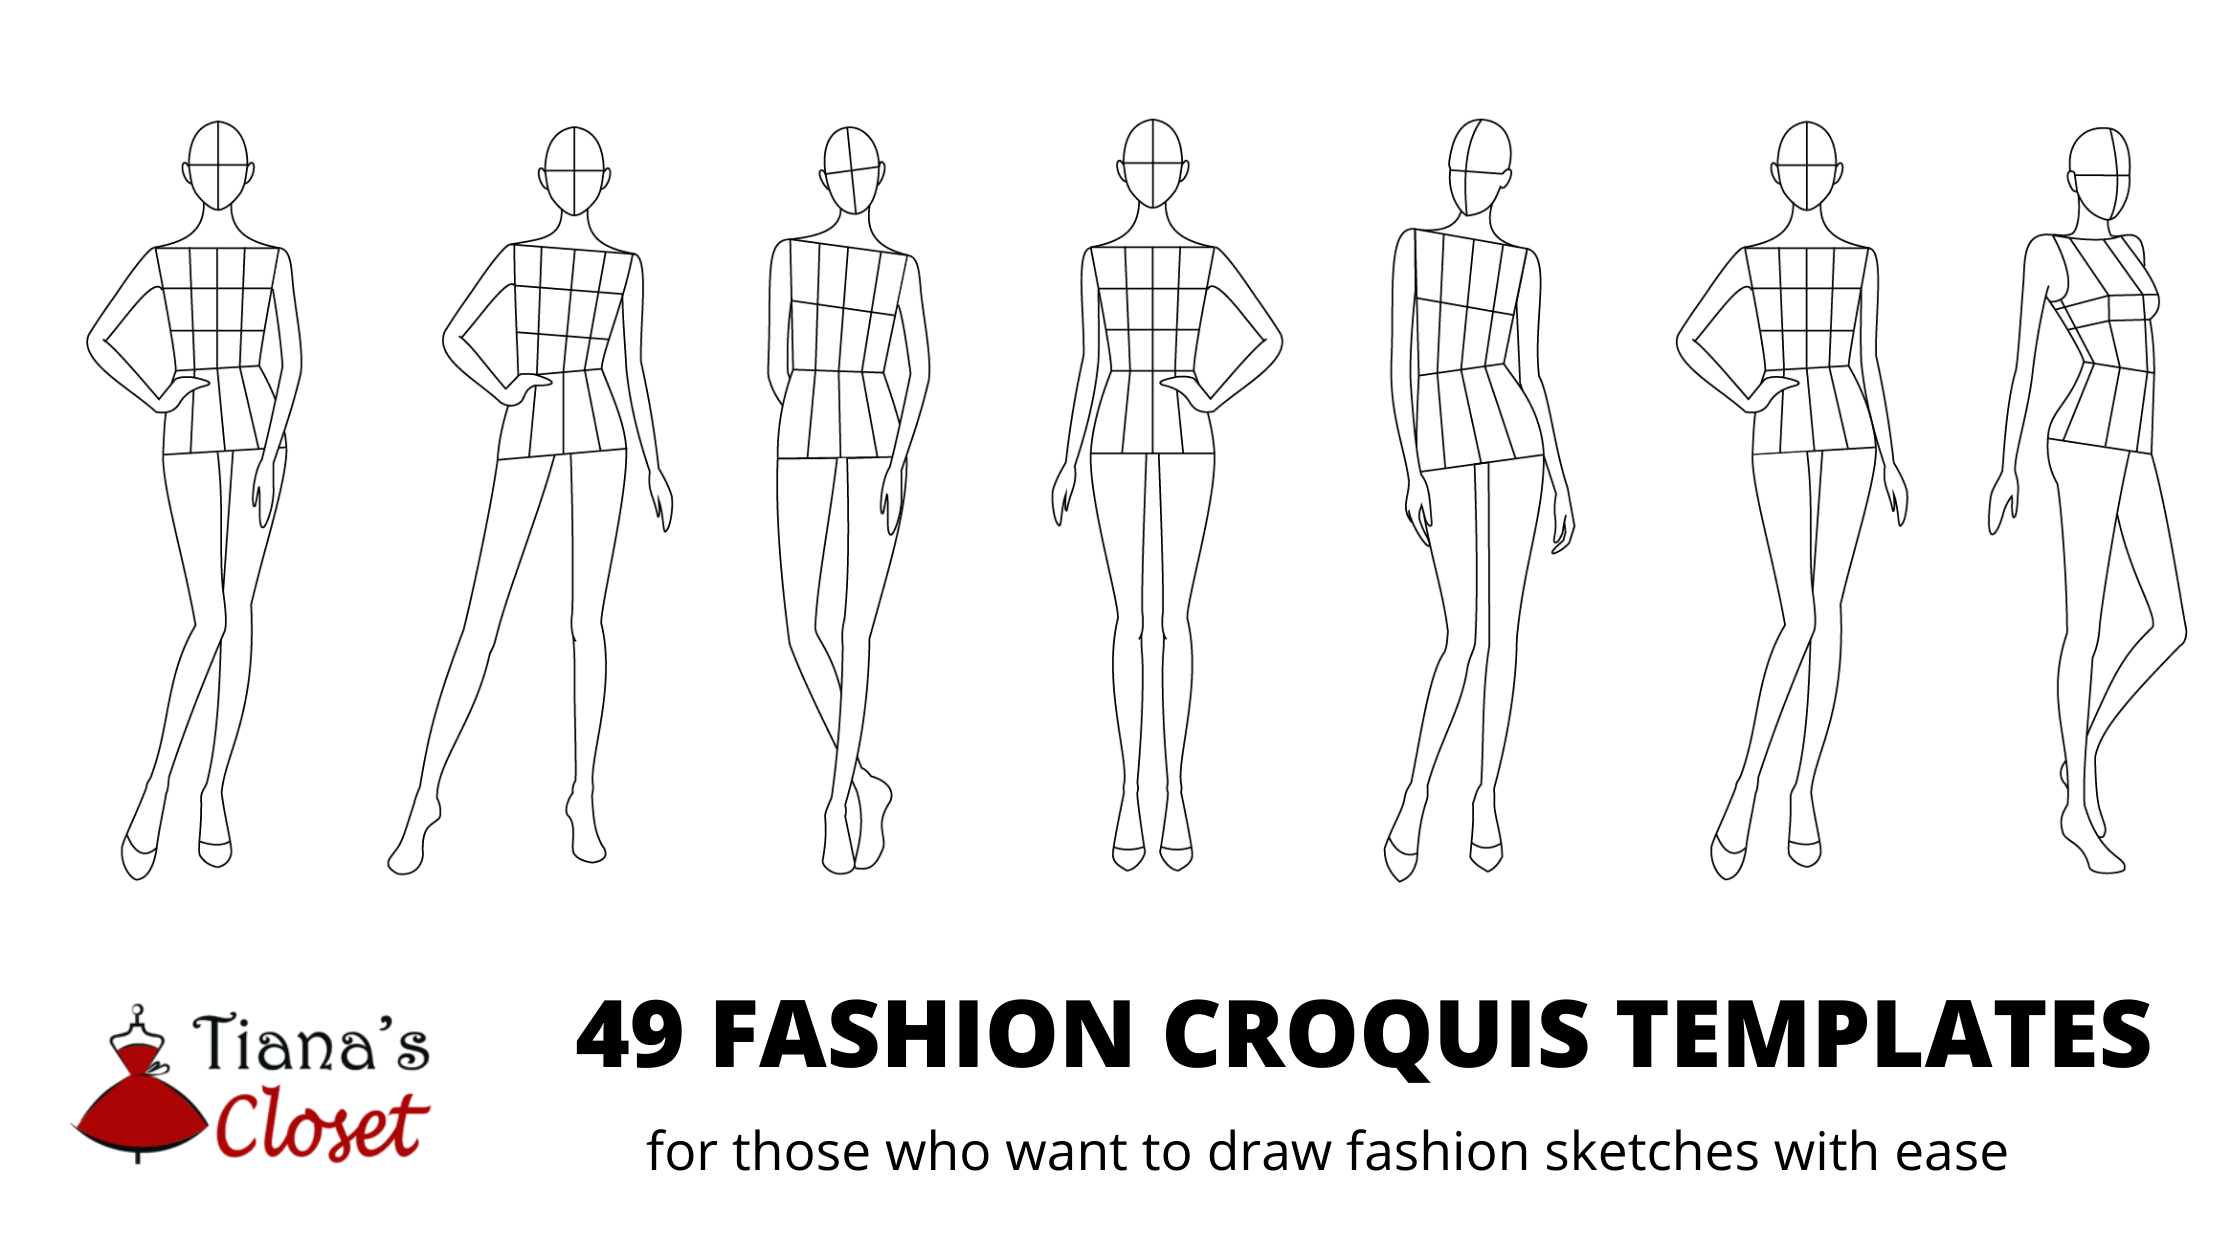 Fashion croquis templates